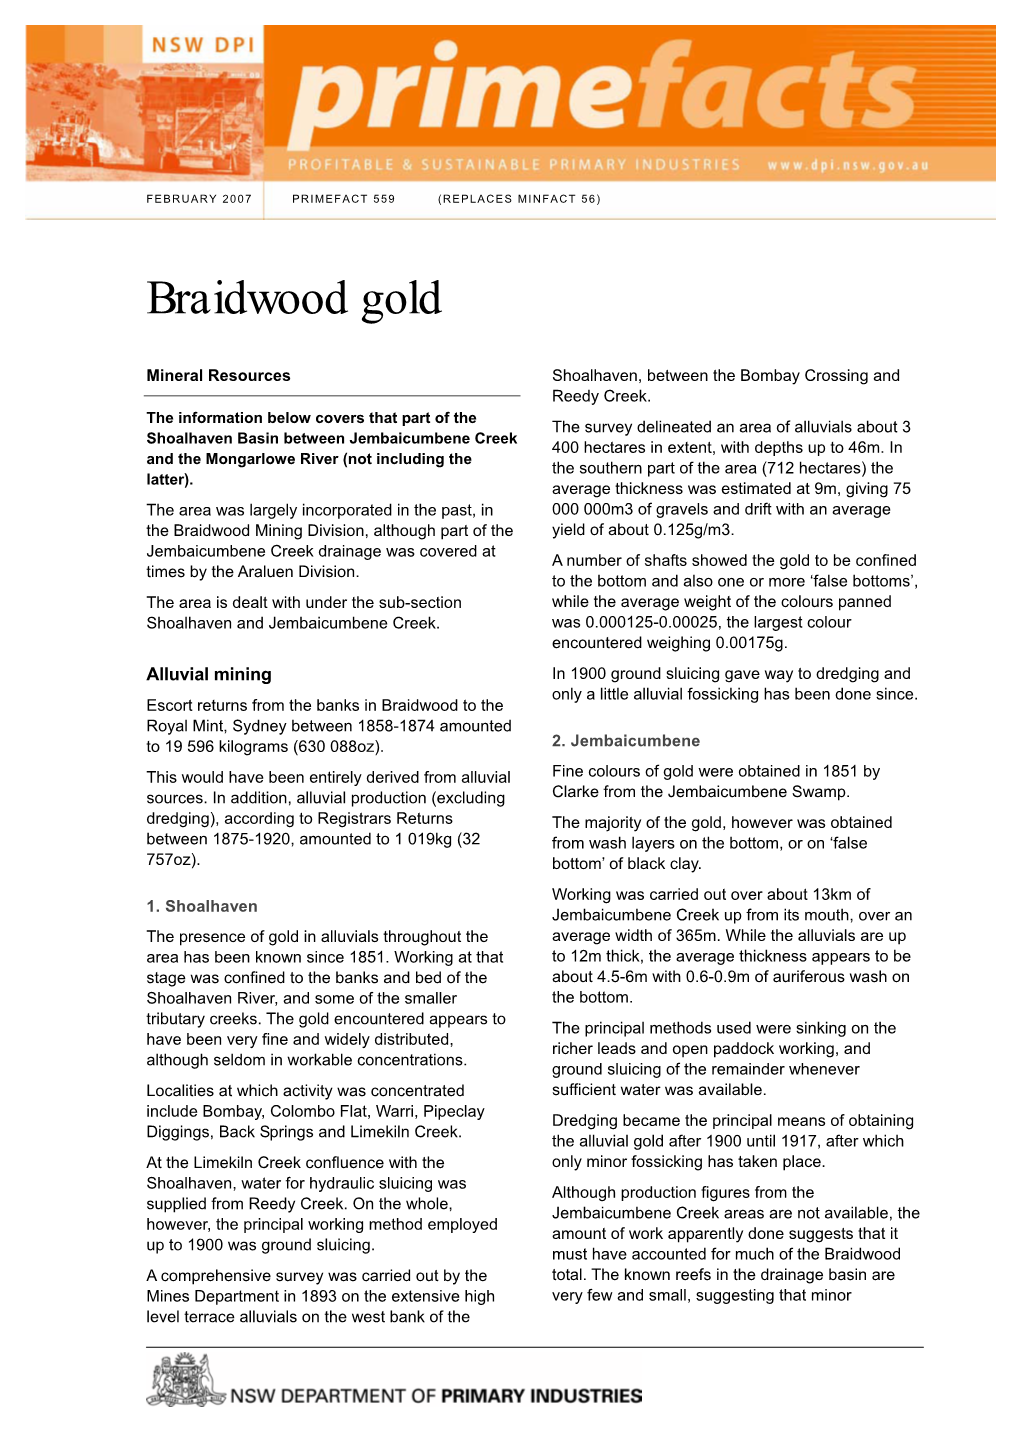 Braidwood Gold